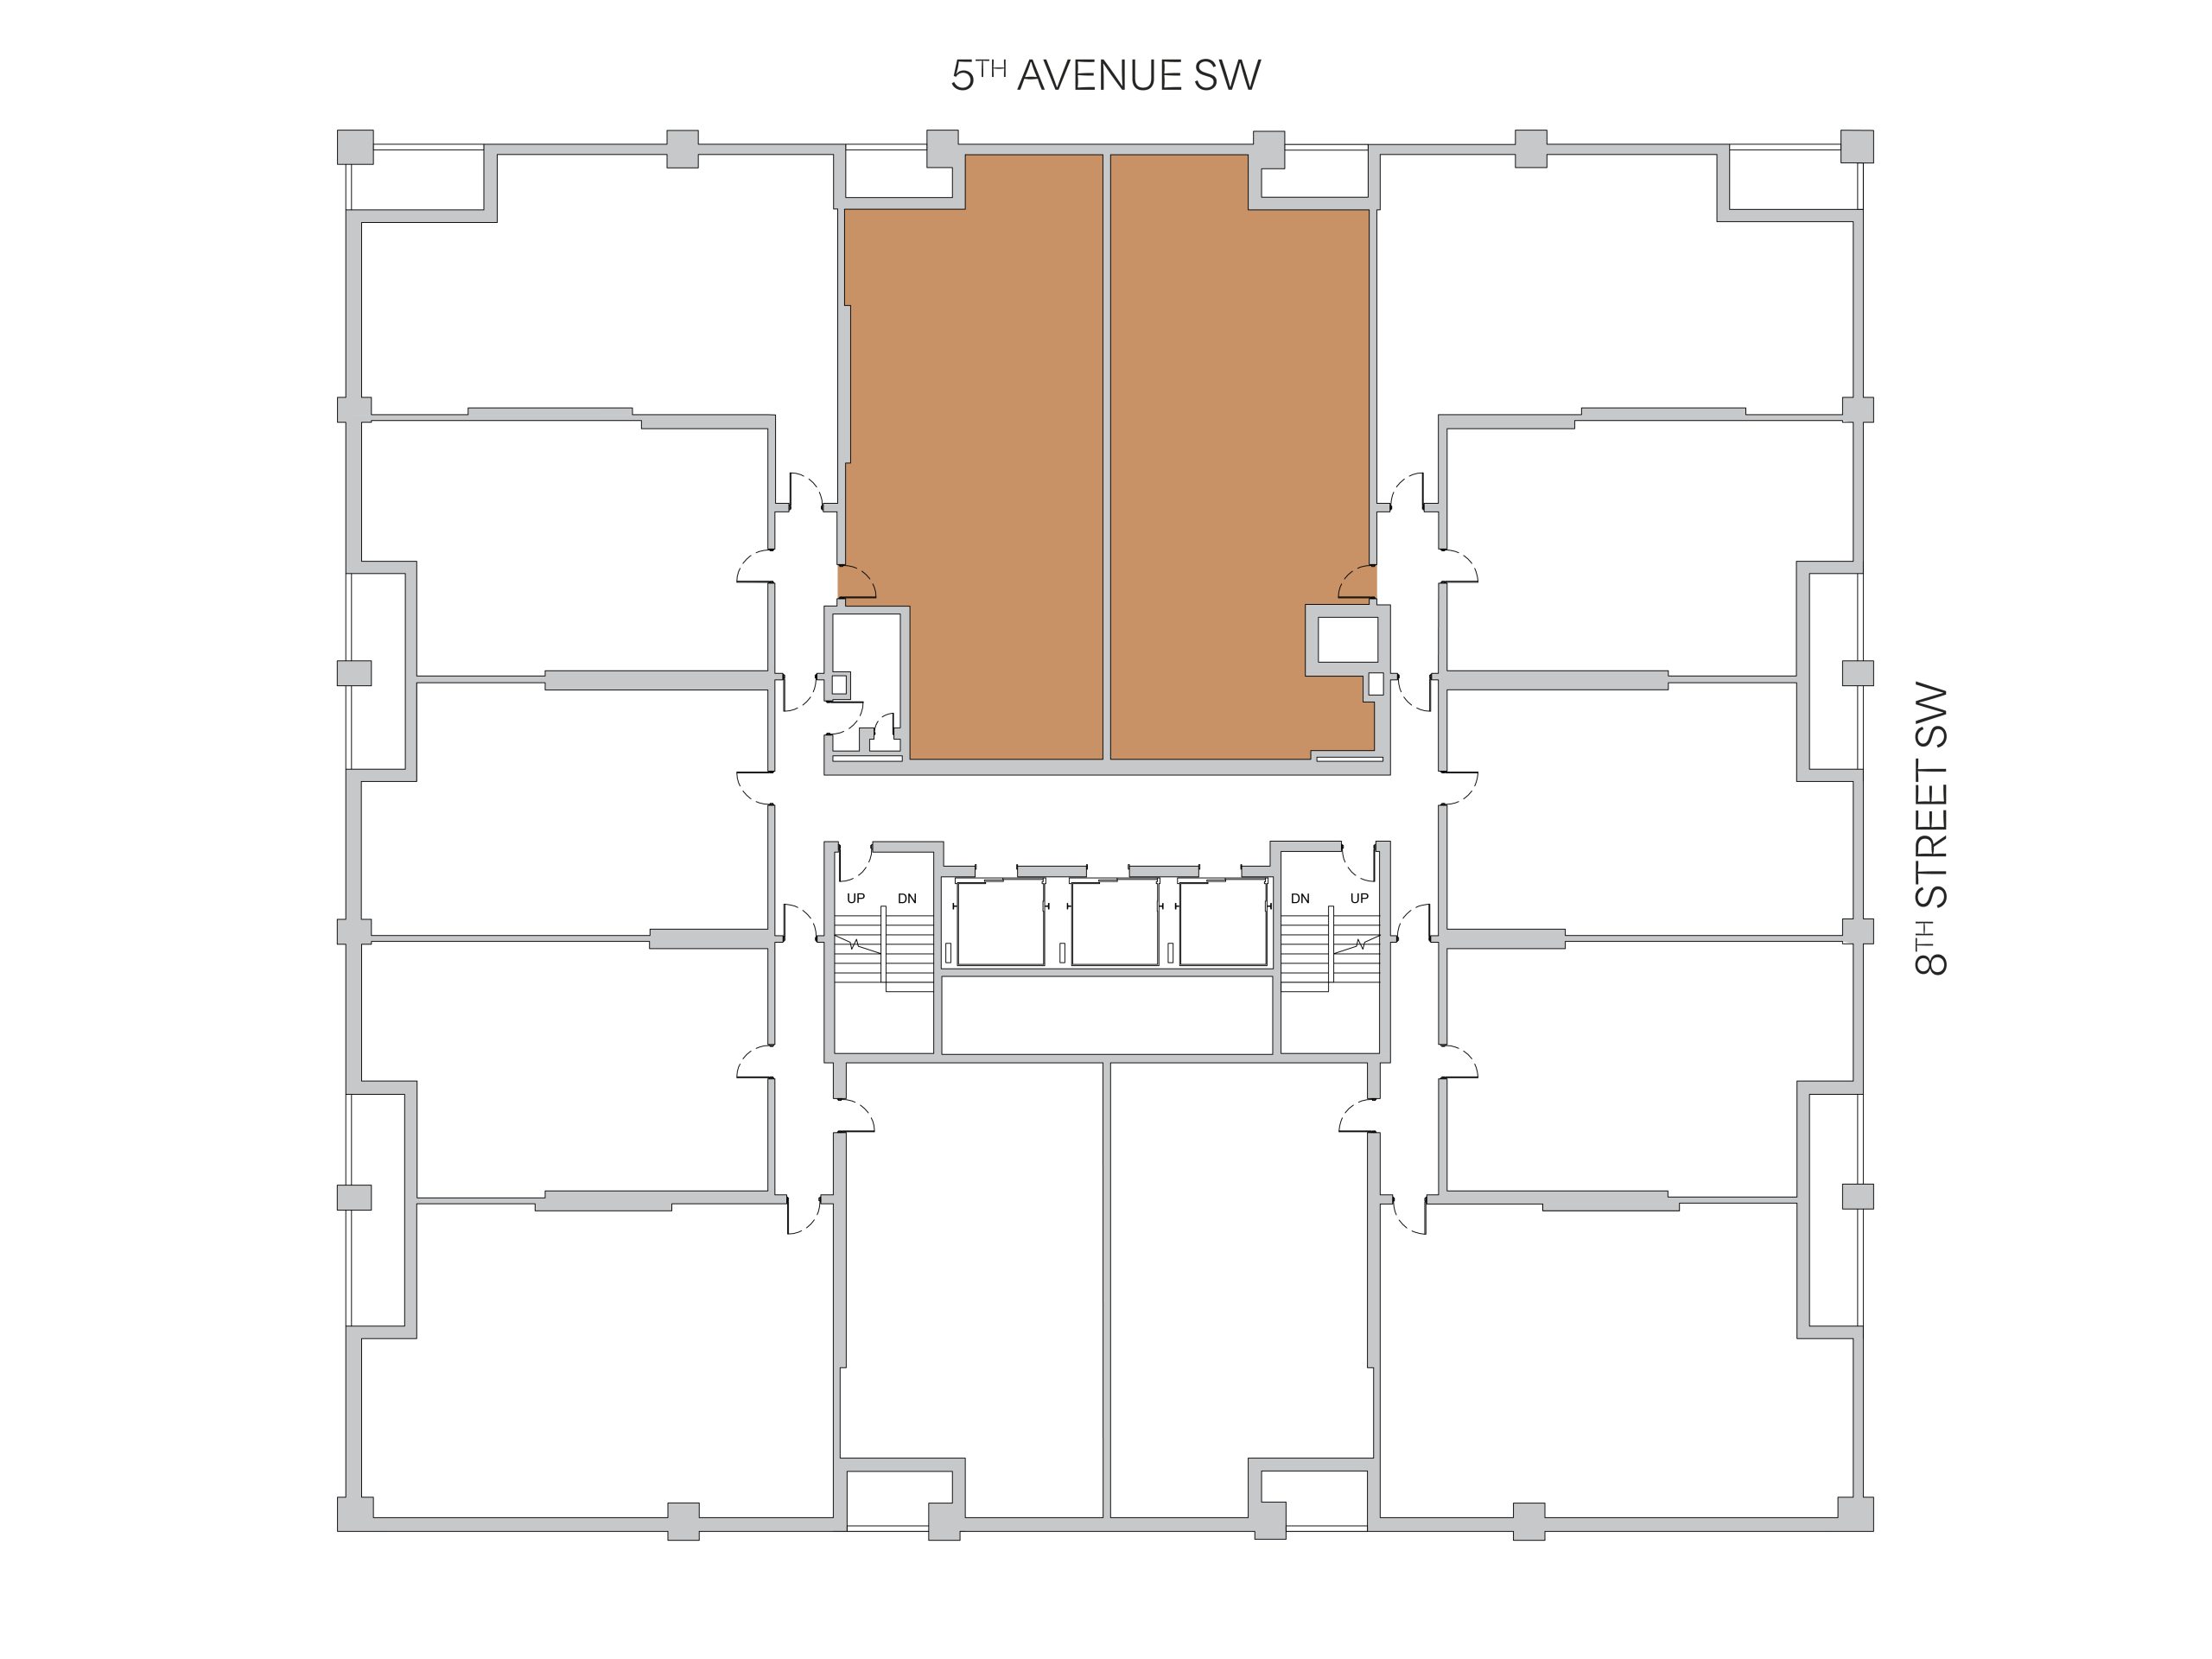 Location of Jasper floor plans in The Cornerstone building